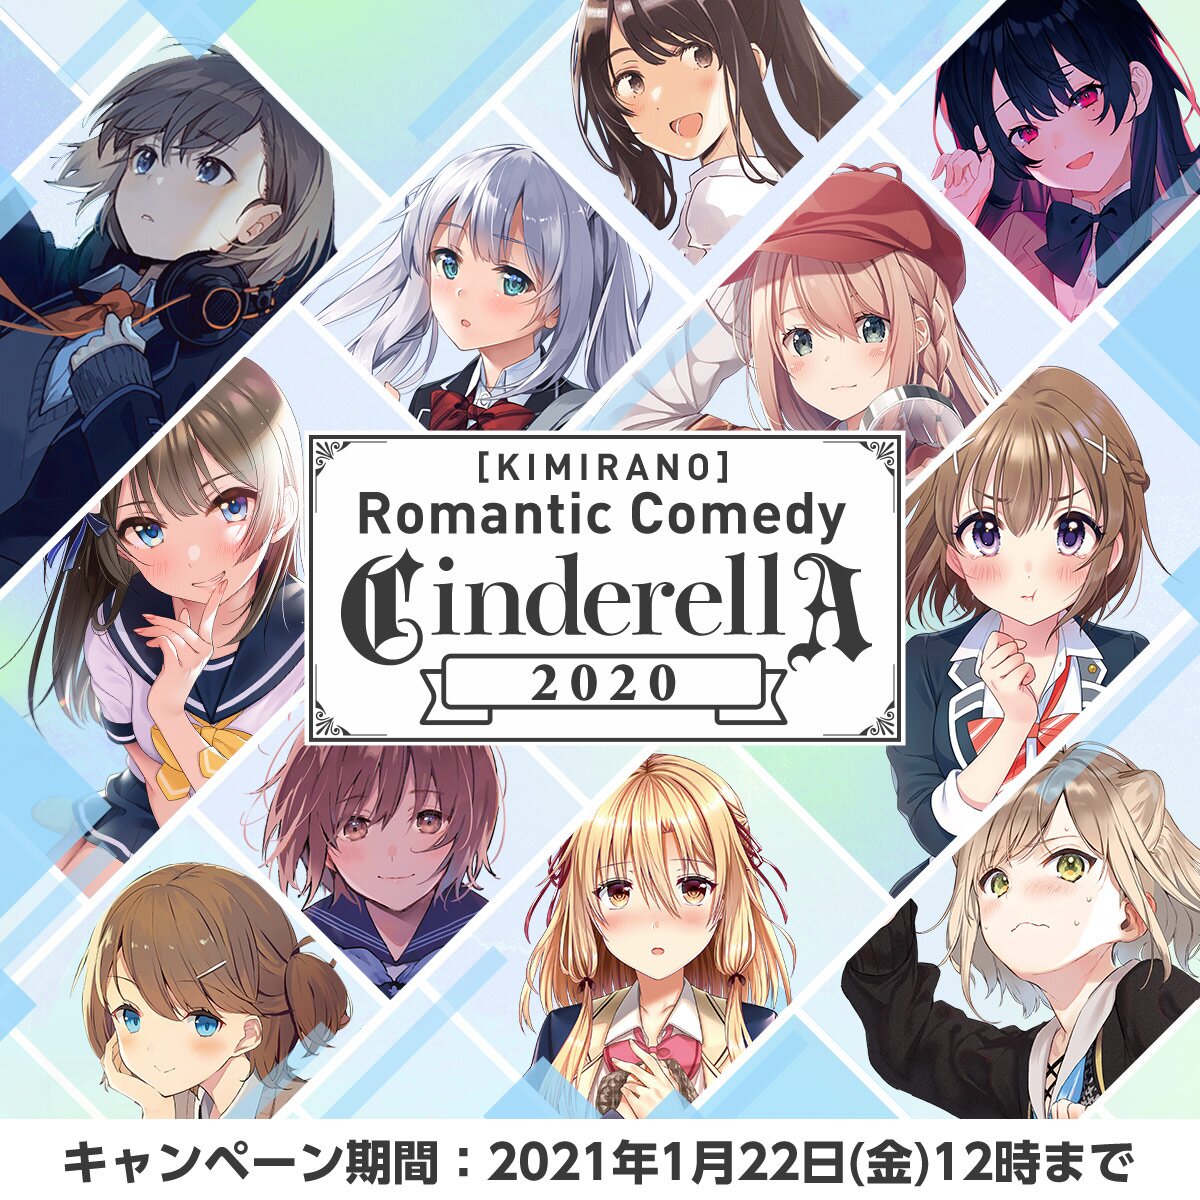 「KIMIRANO Romantic Comedy Cinderella2020」キャンペーン期間：2021年1月22日(金)12時まで